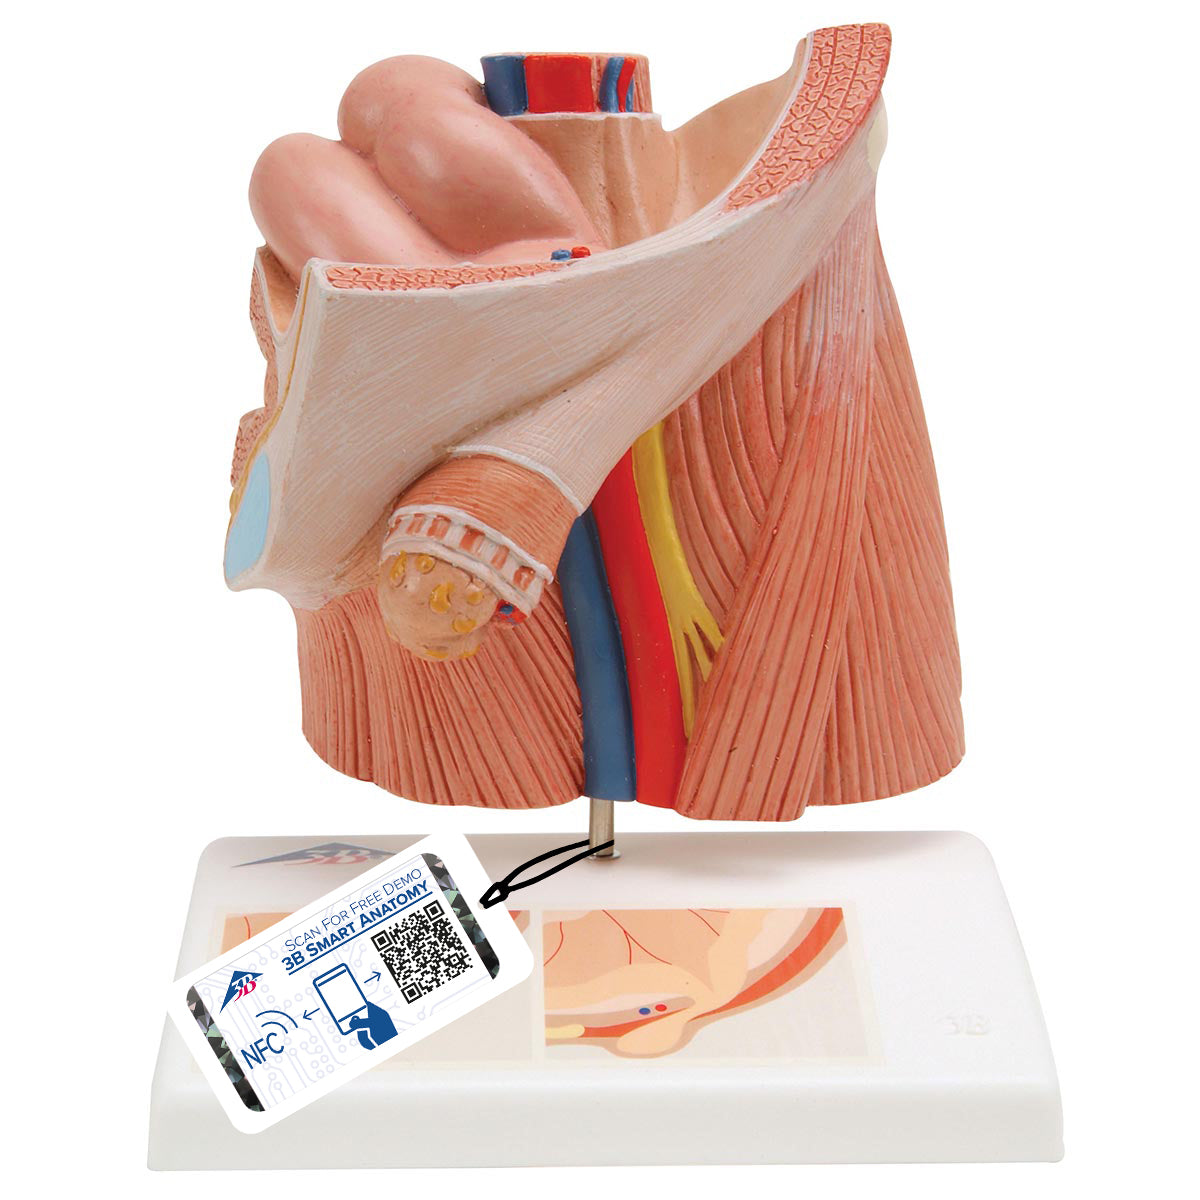 Anatomical model illustrating inguinal hernia